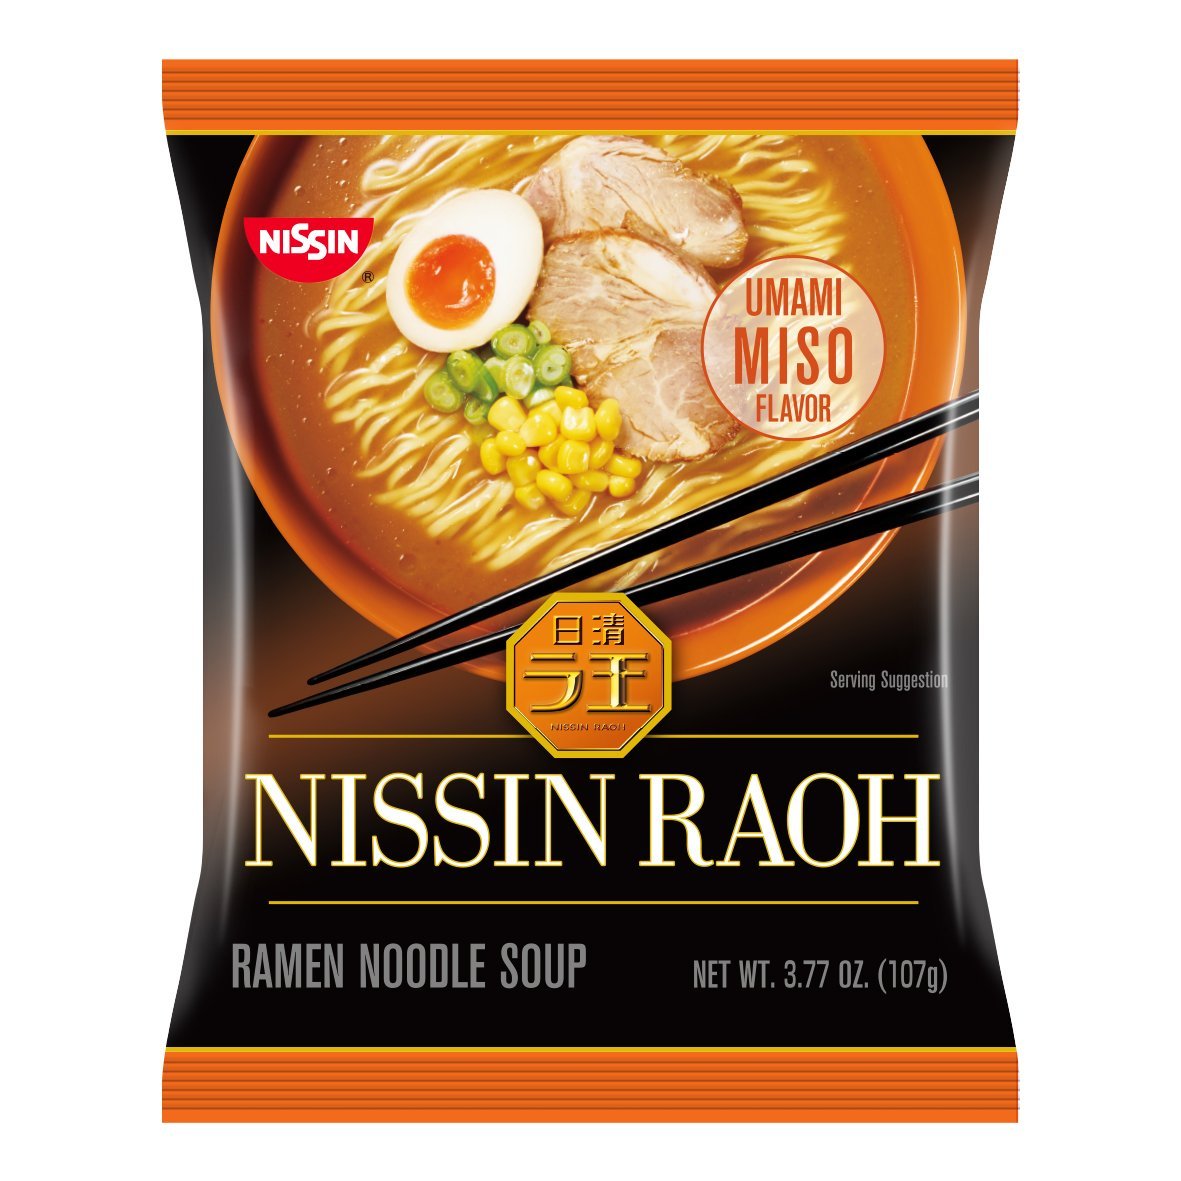 Amazon.com : Nissin RAOH Ramen Noodle Soup, Umami Tonkotsu ...